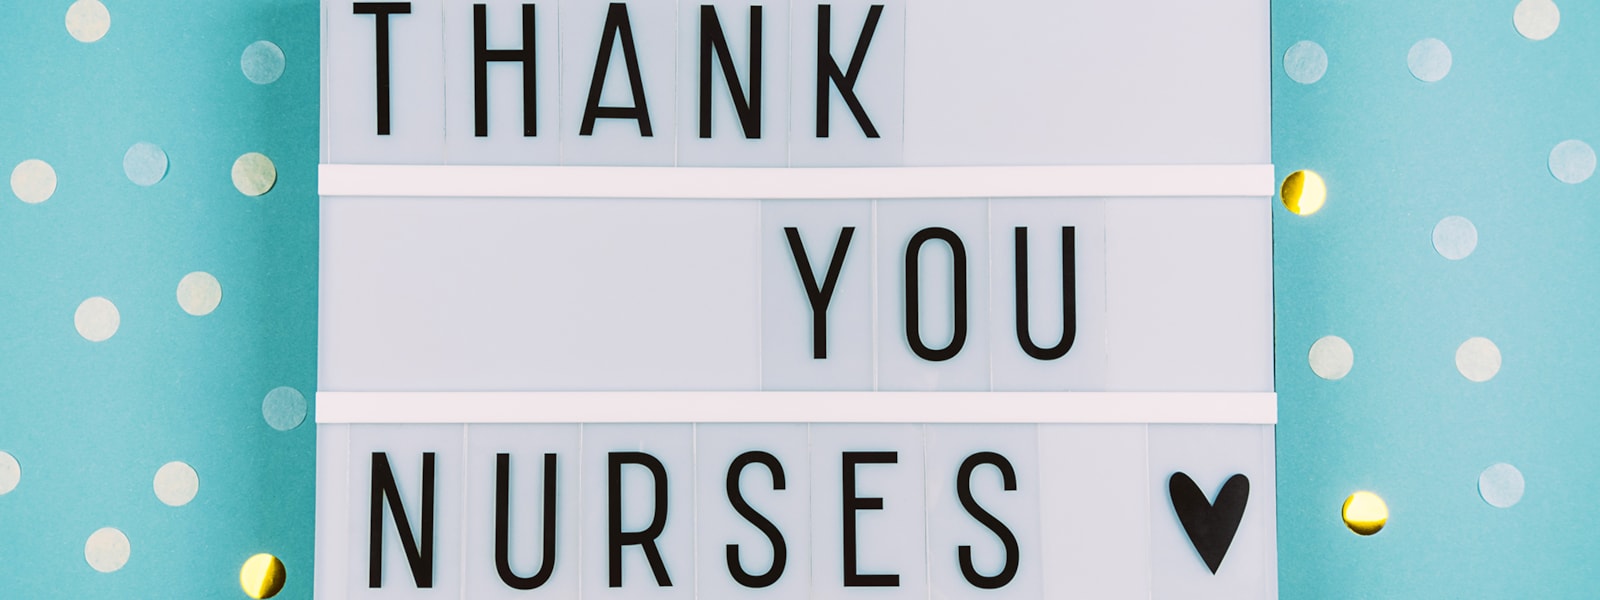 Thank you nurses sign